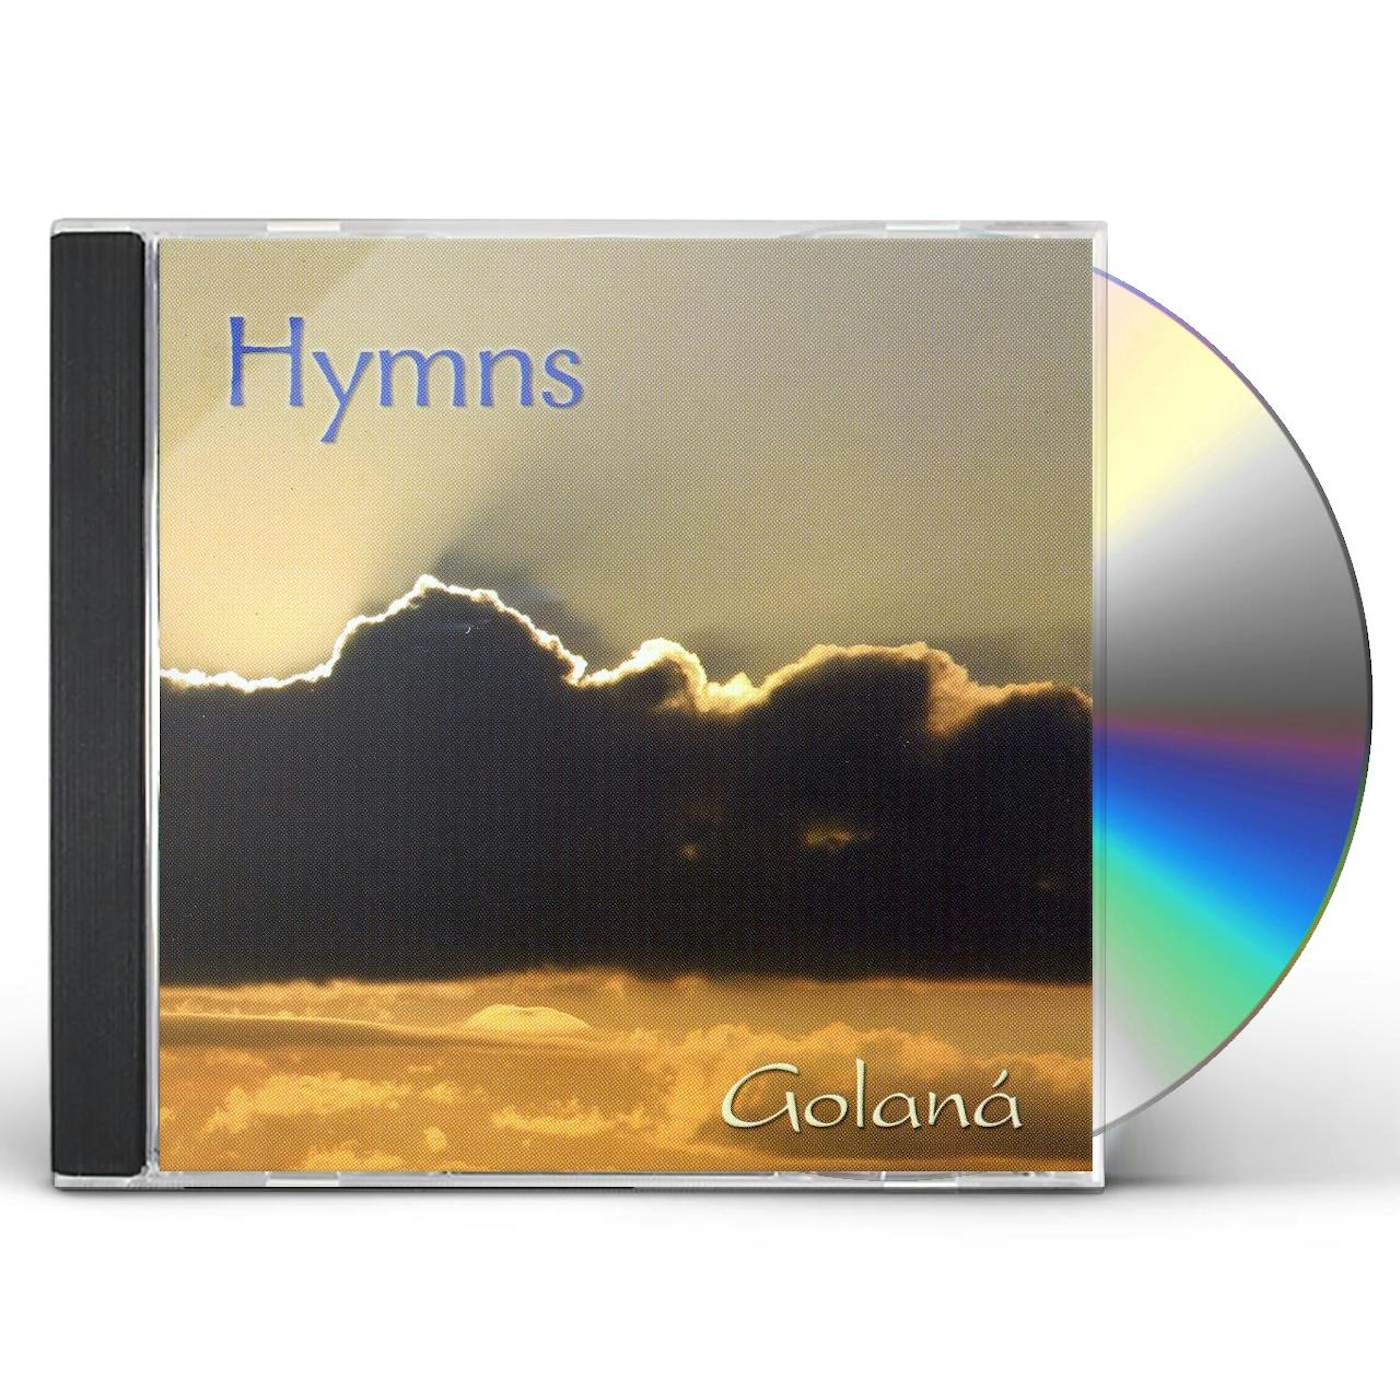 Golana HYMNS CD